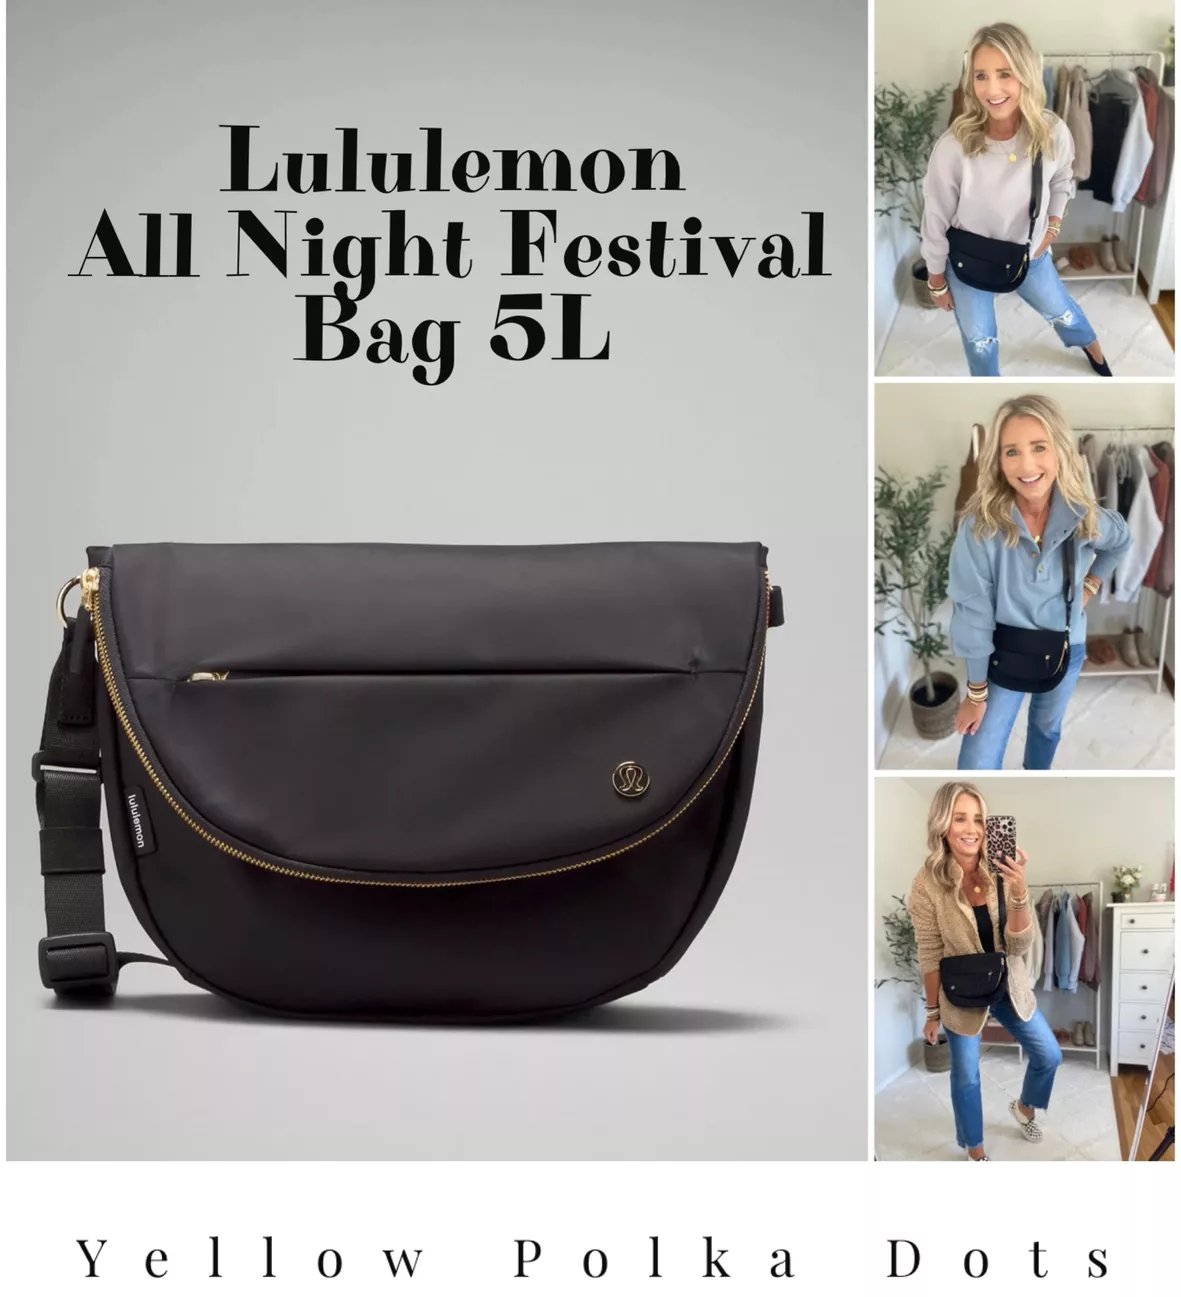 All Night Festival Bag 5L